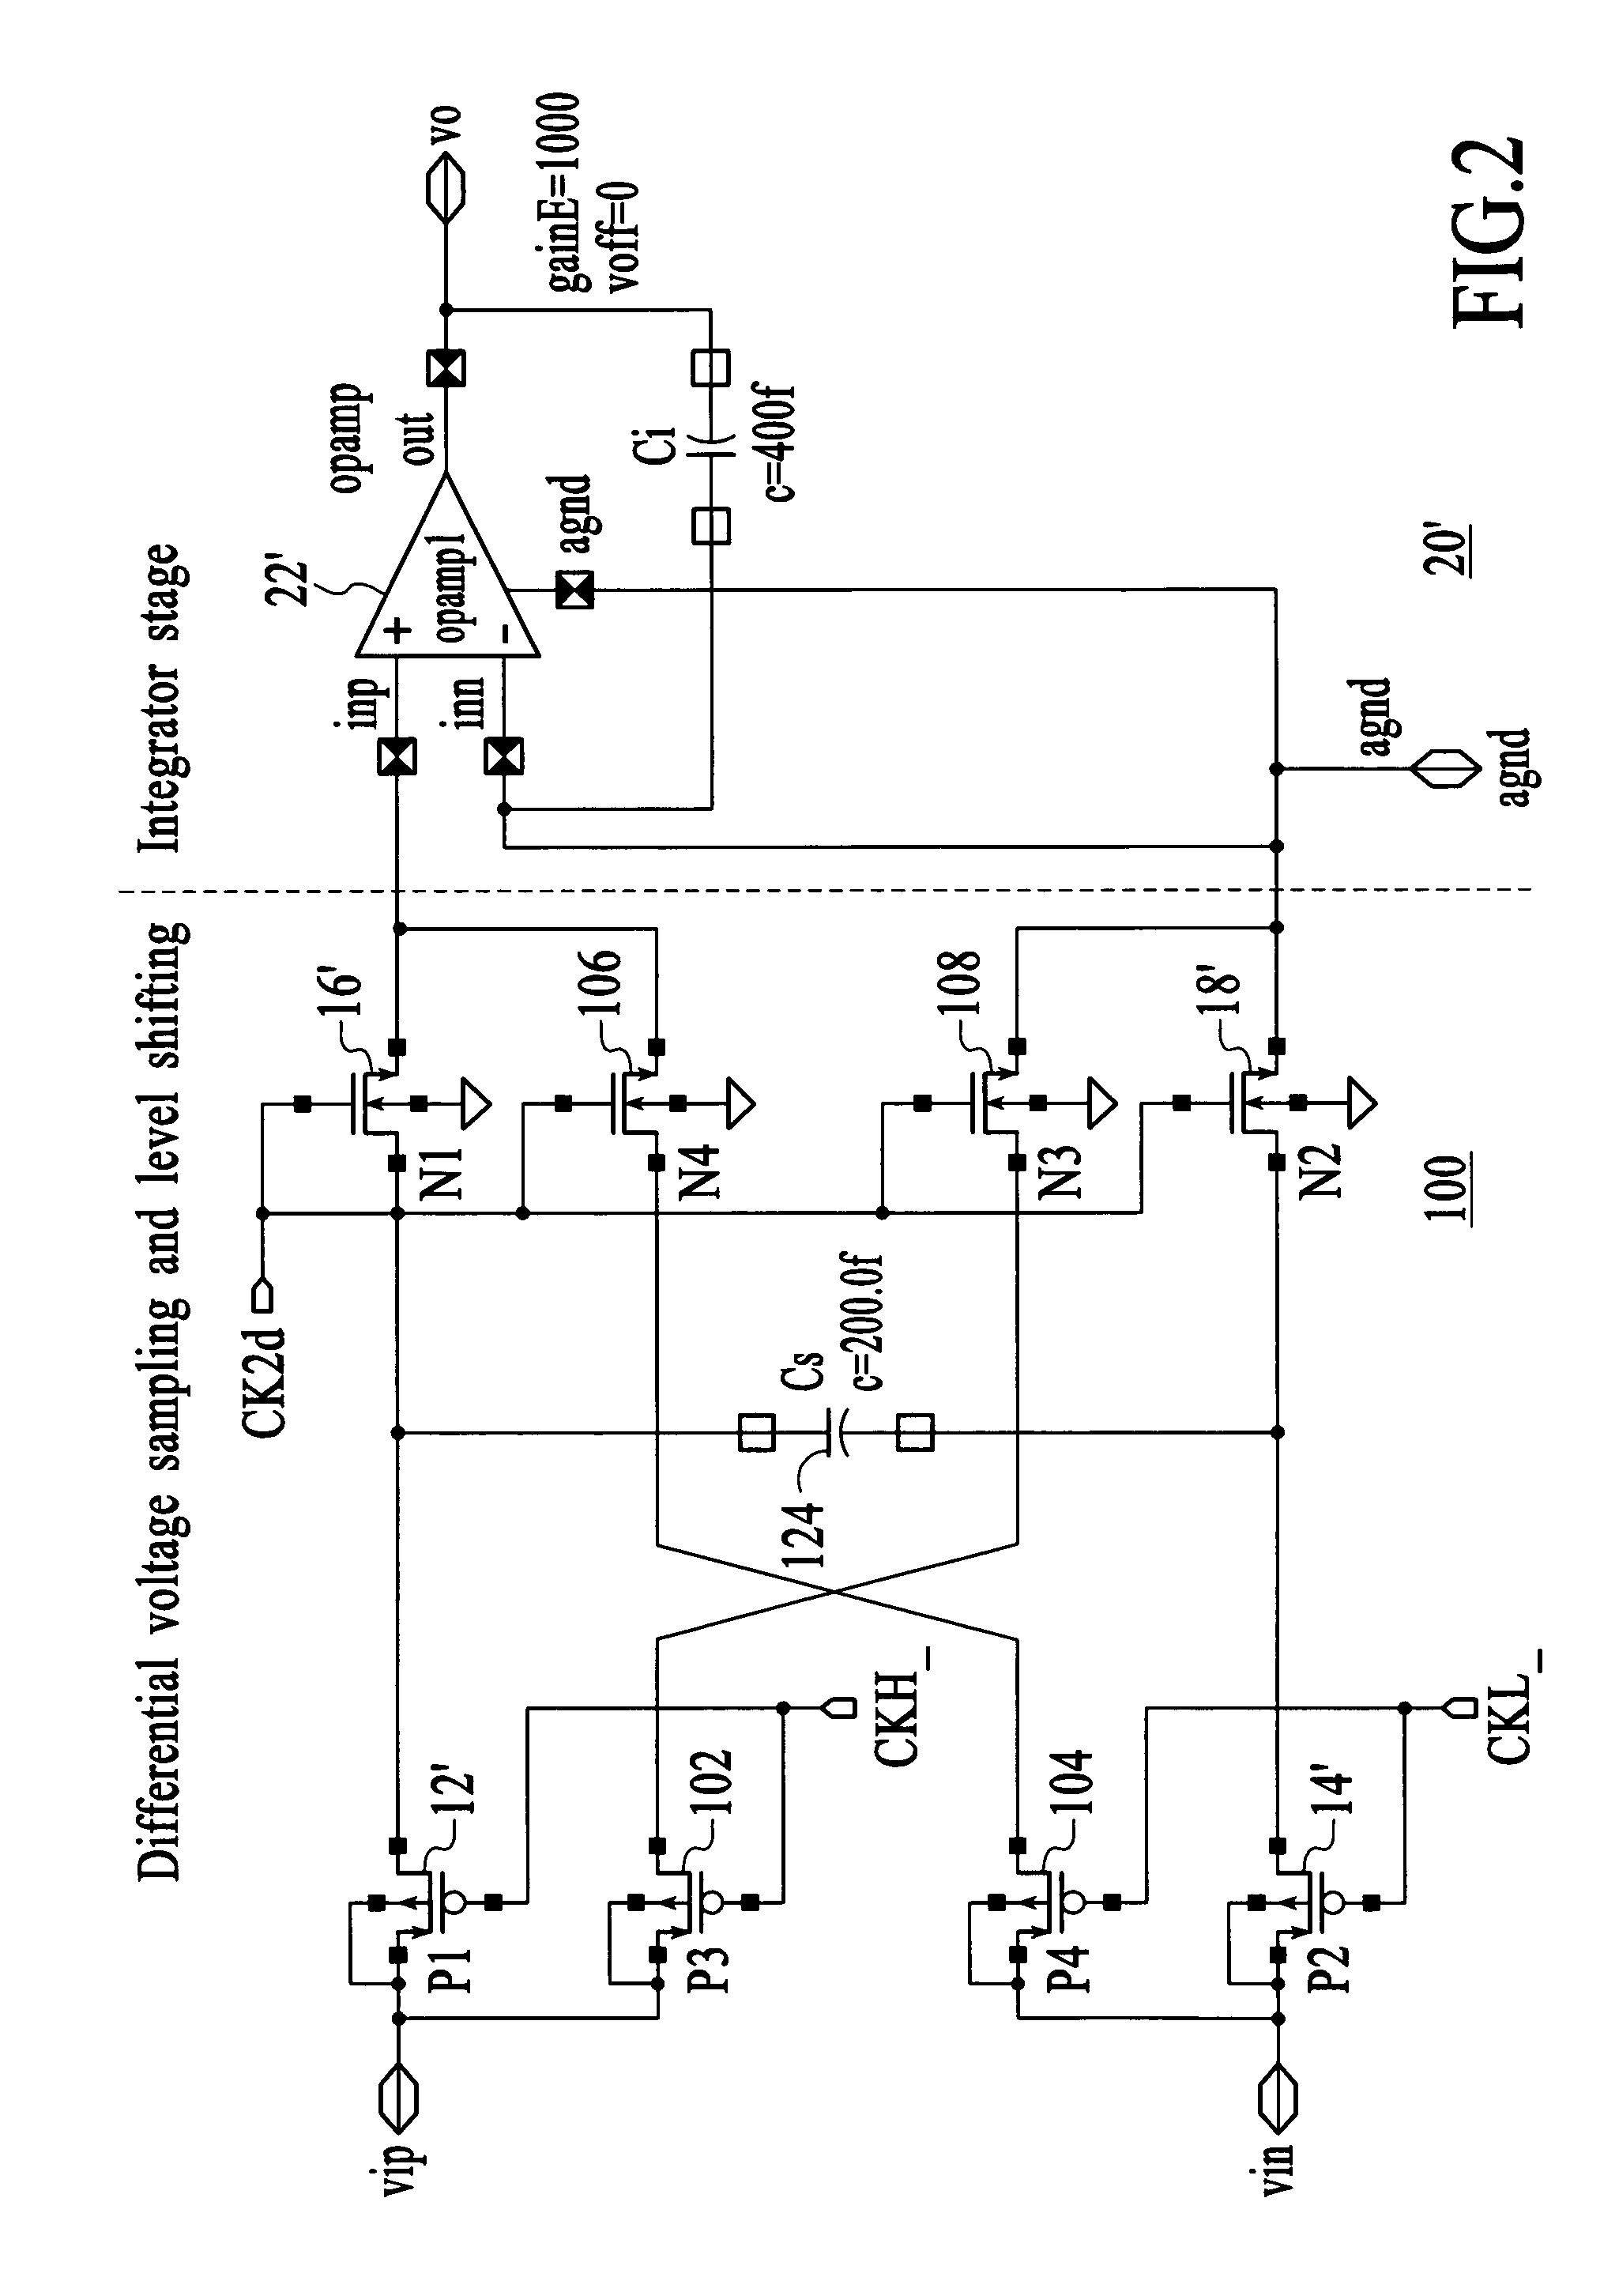 Sampling and level shifting circuit